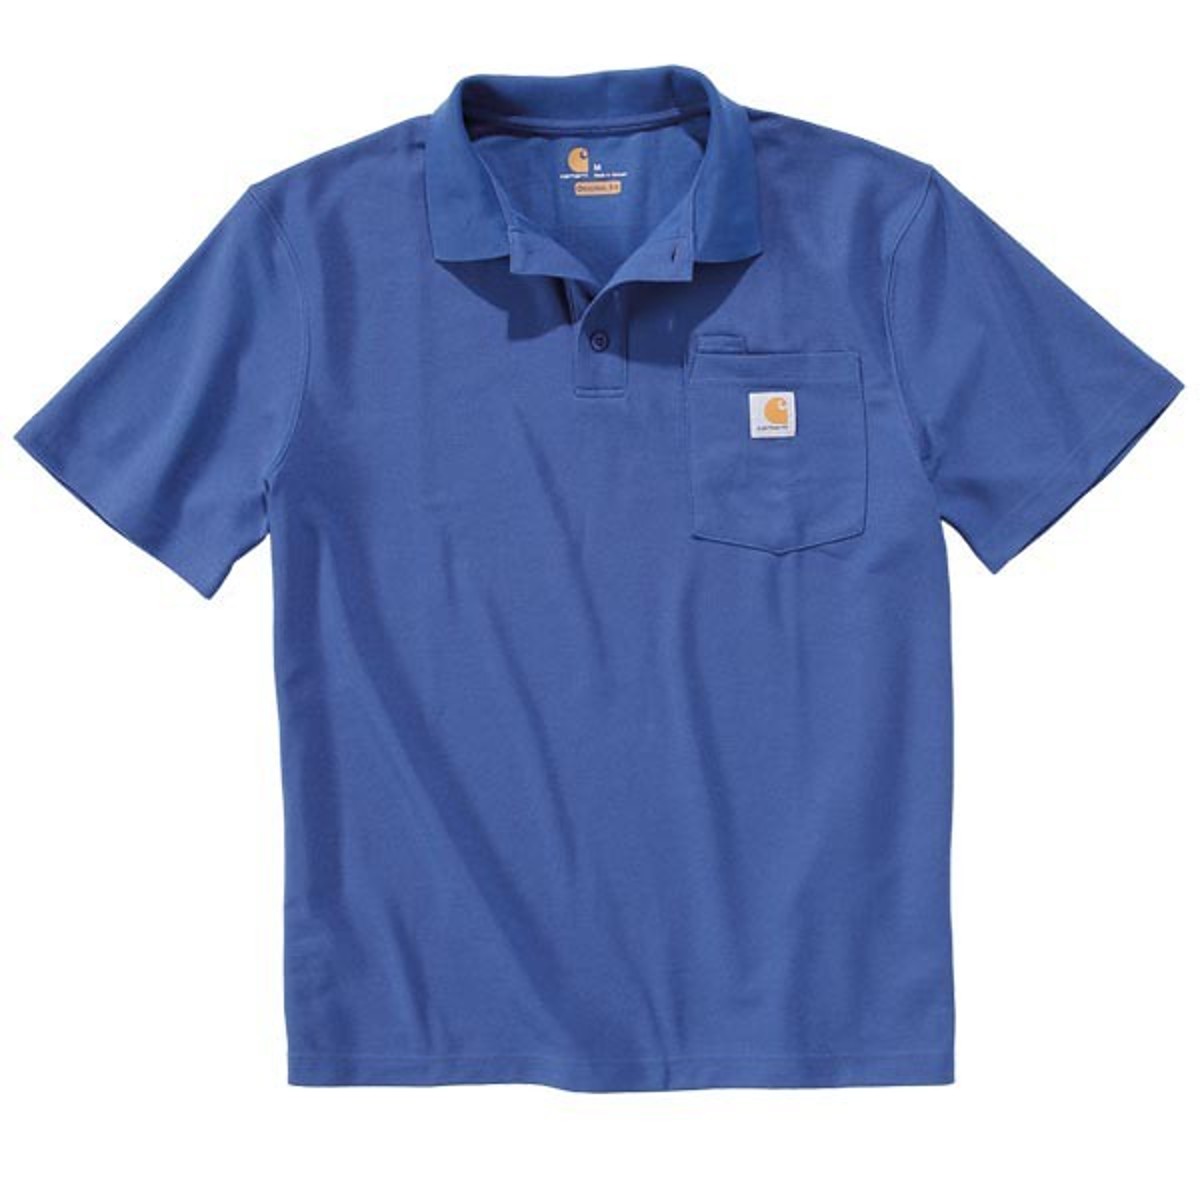 Carhartt polo shirt Chest pocket